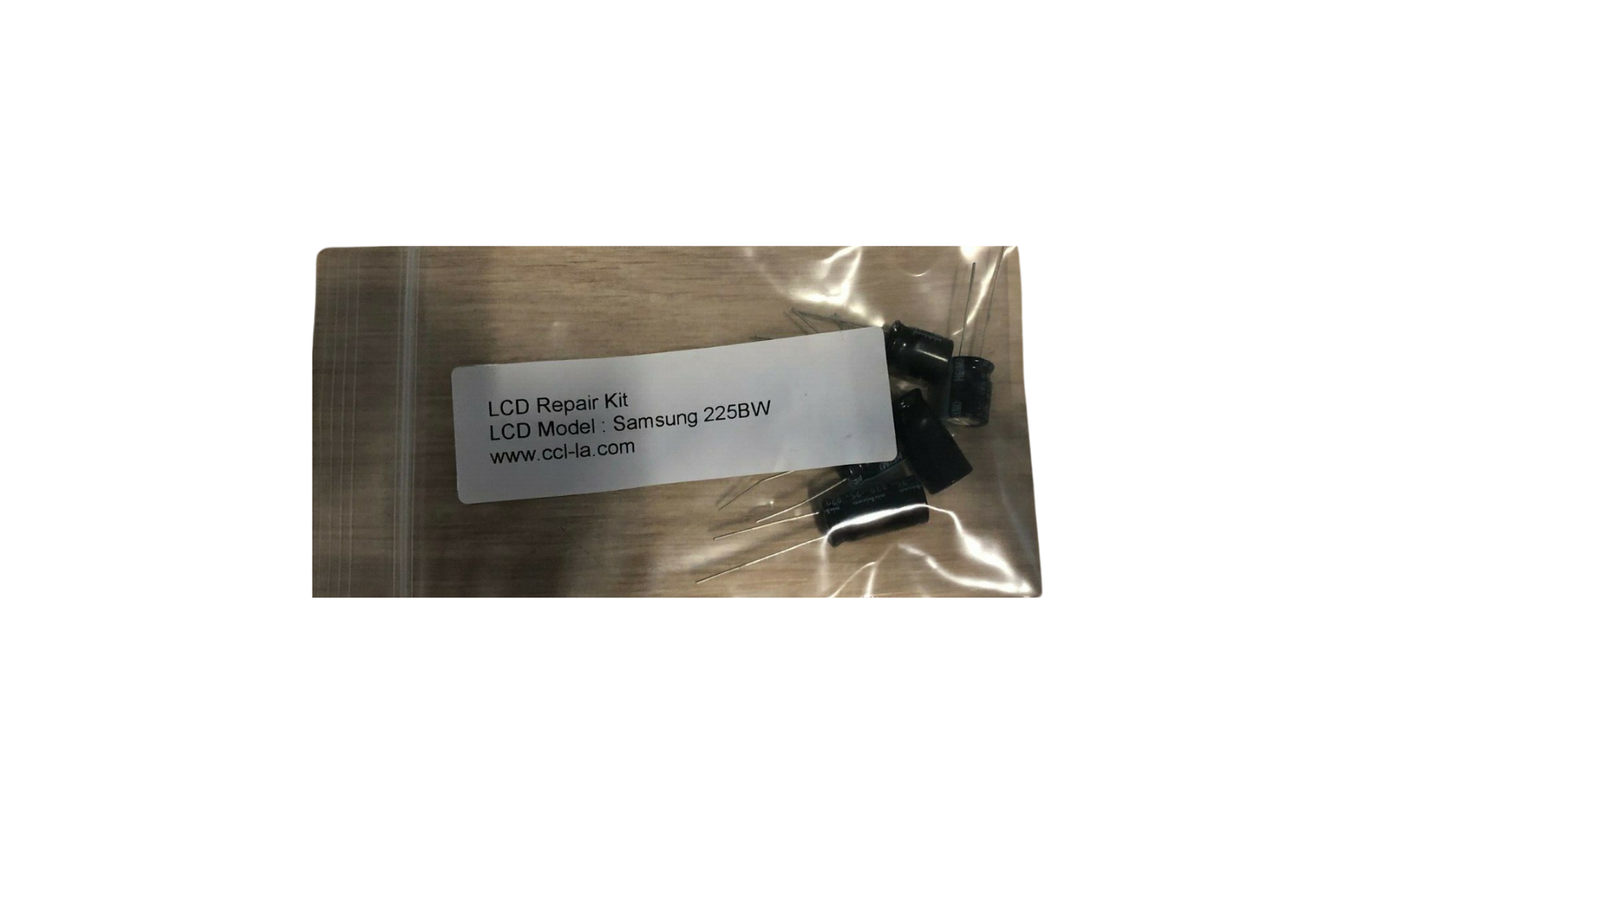 LCD repair kit for Samsung 225bw